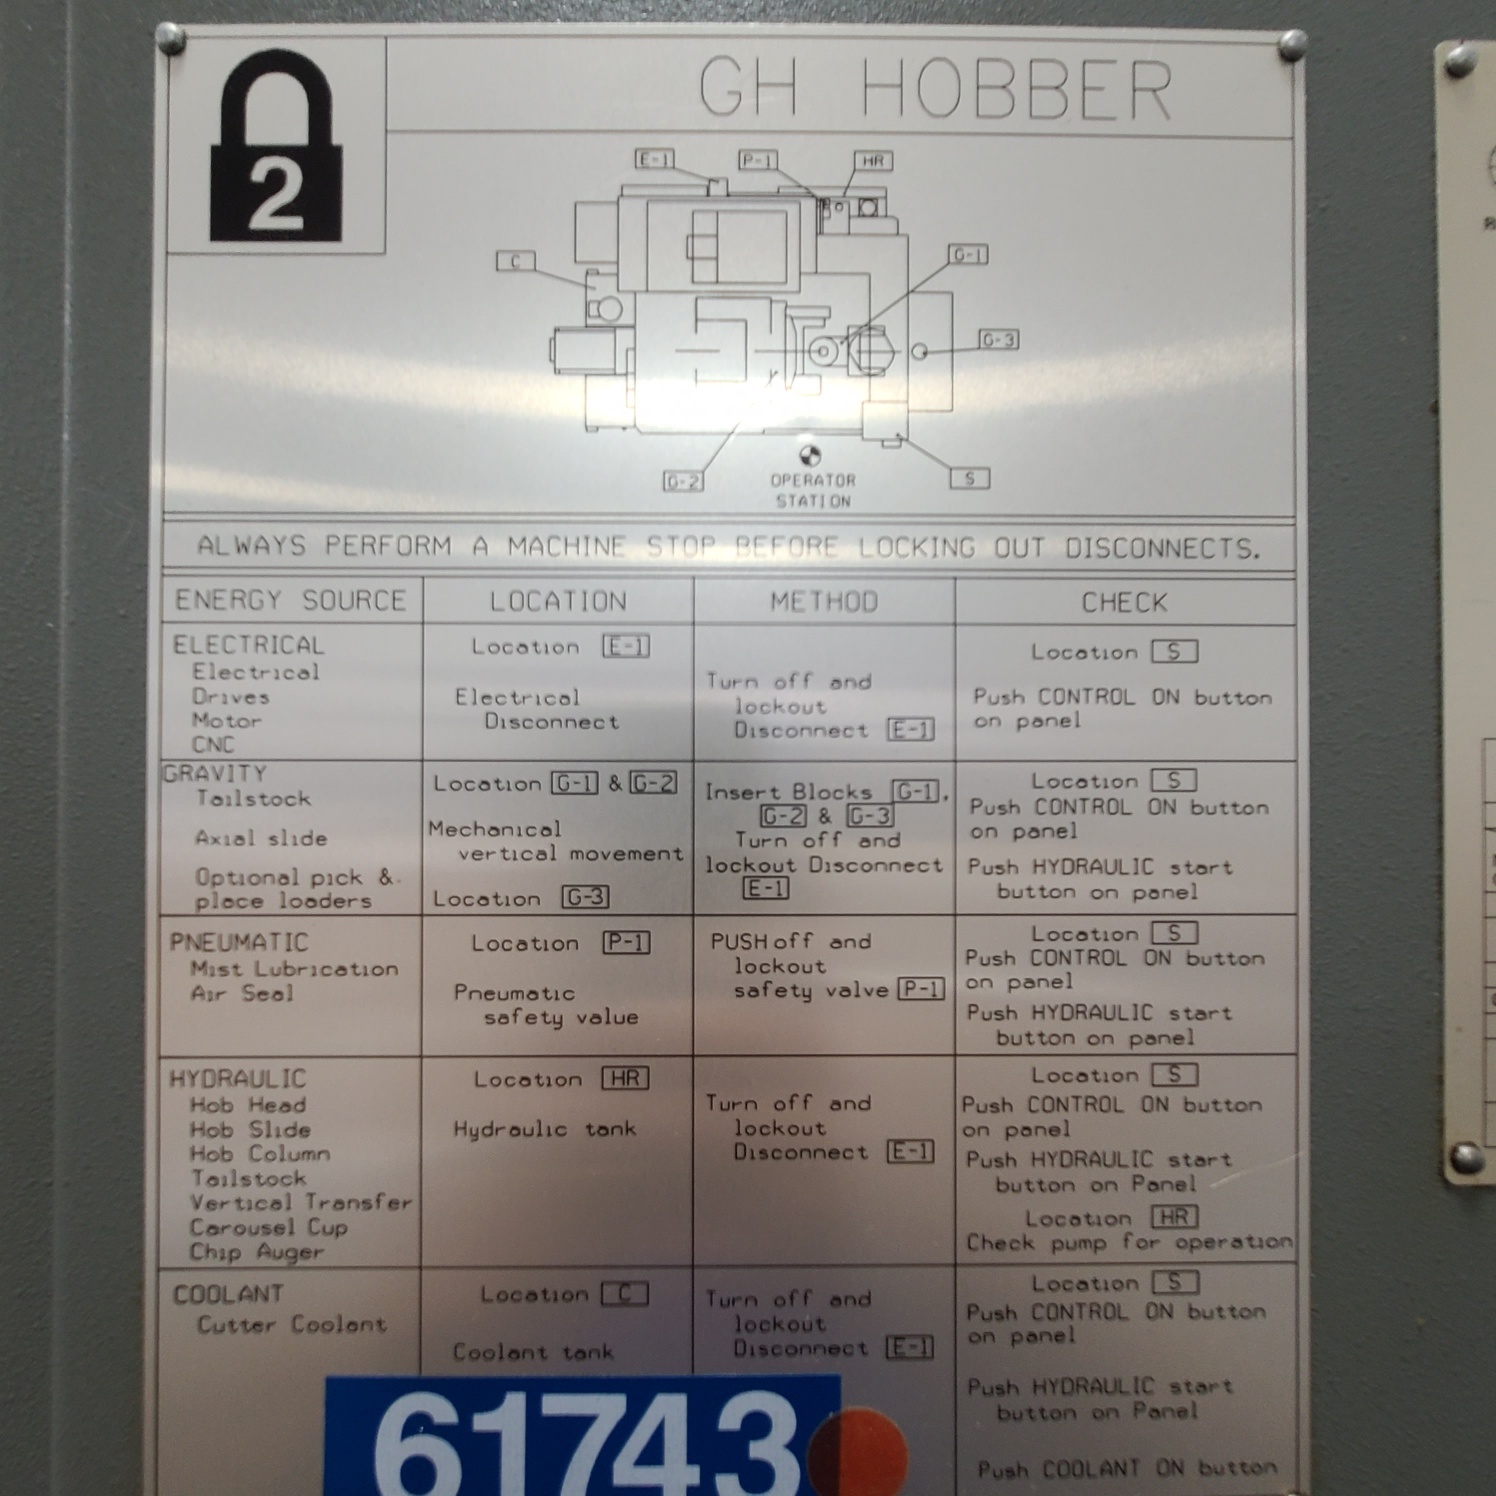 1995 GLEASON 200GH GEAR HOBBERS (CNC) | Piselli Enterprises